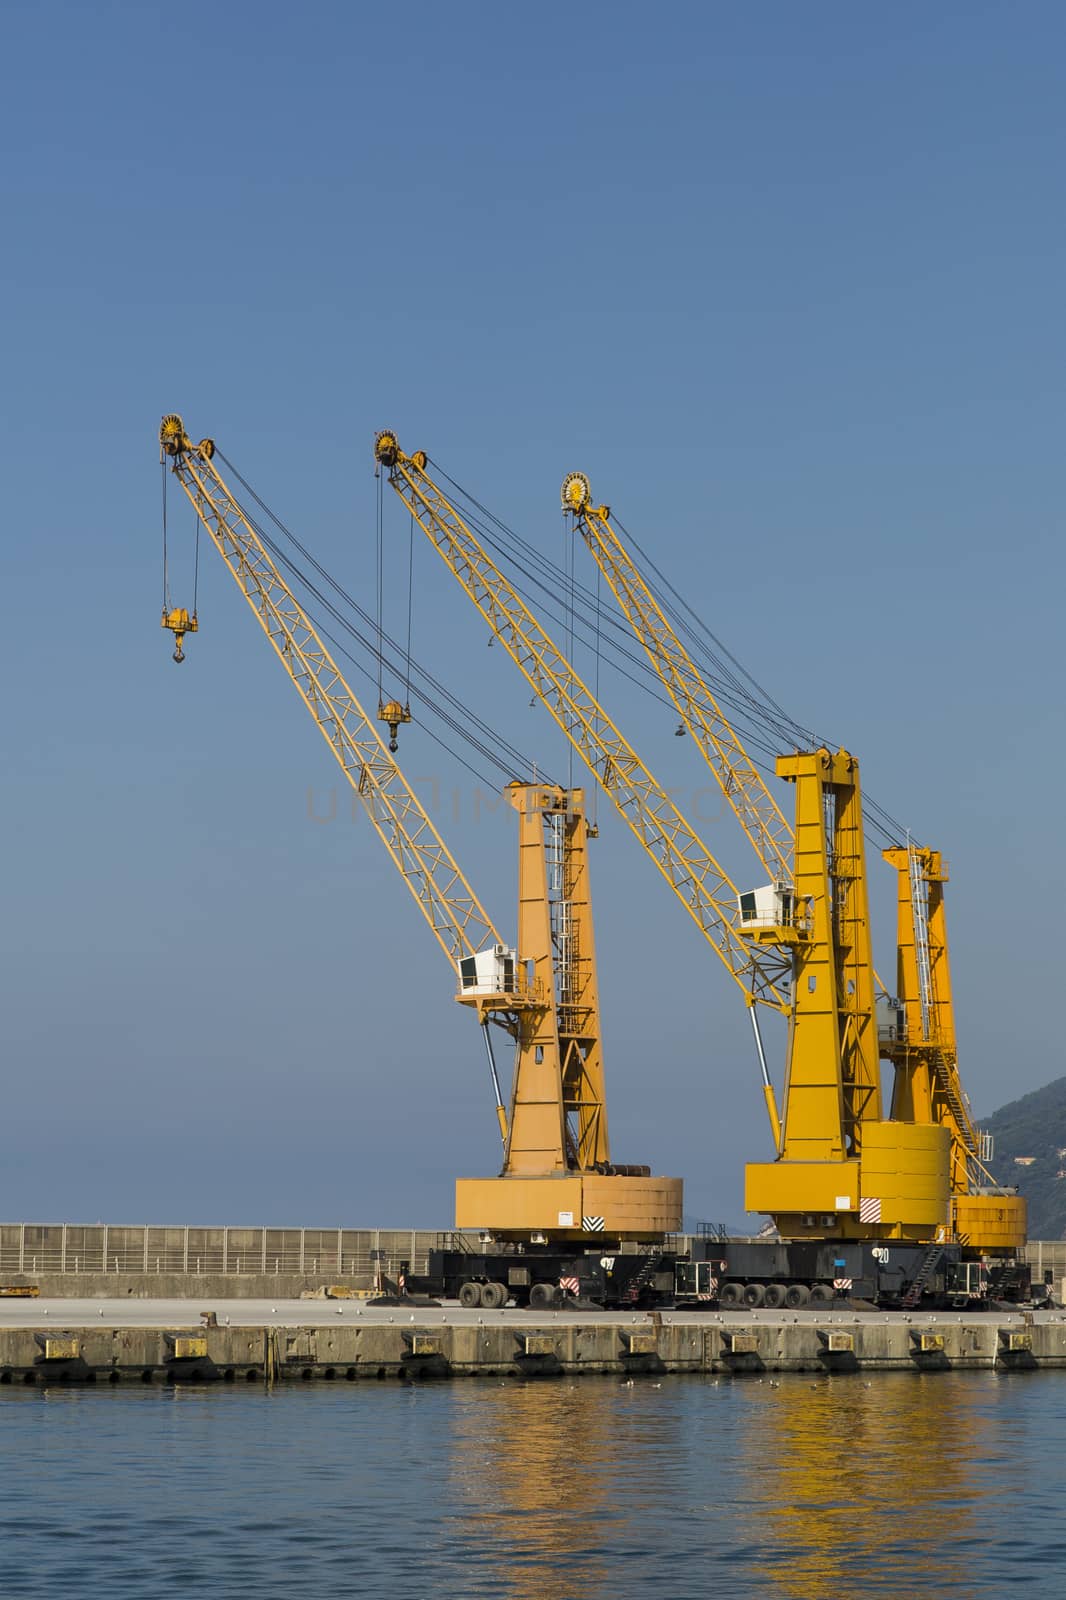 Crane at the port by nicobernieri